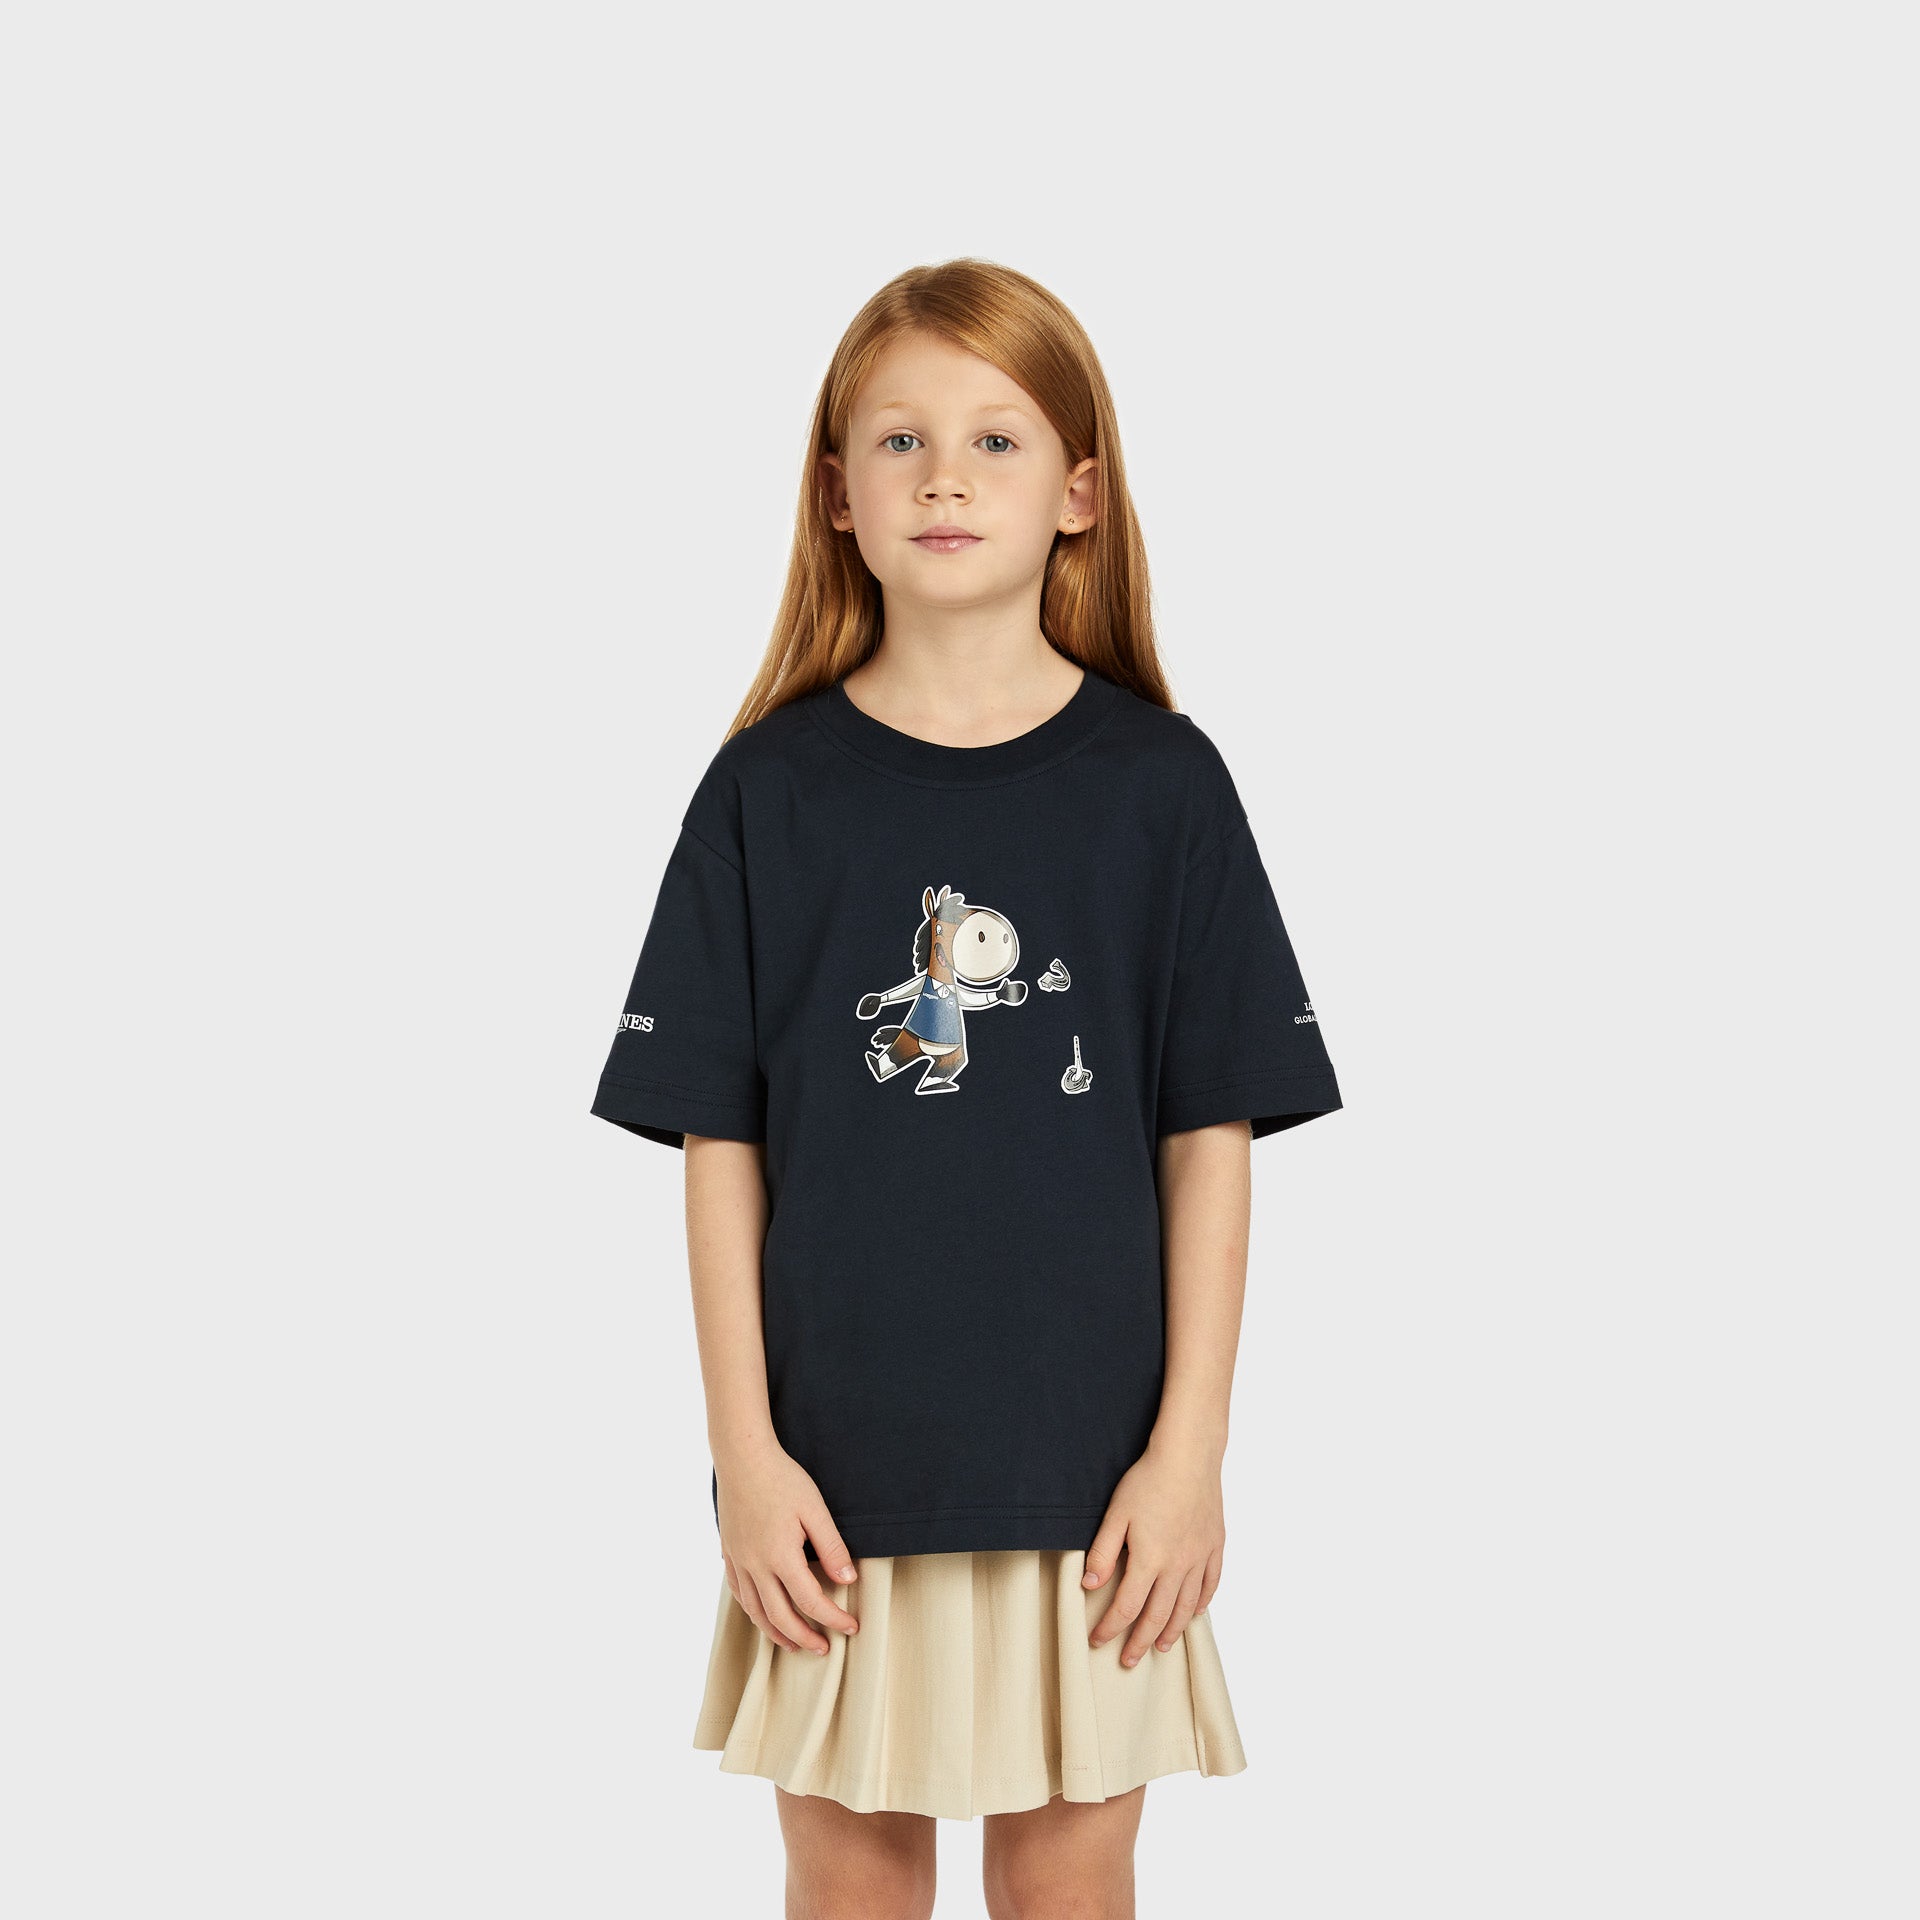 LGCT Sammy #1 Kids T-Shirt/Navy Blue + GIFT STICKER